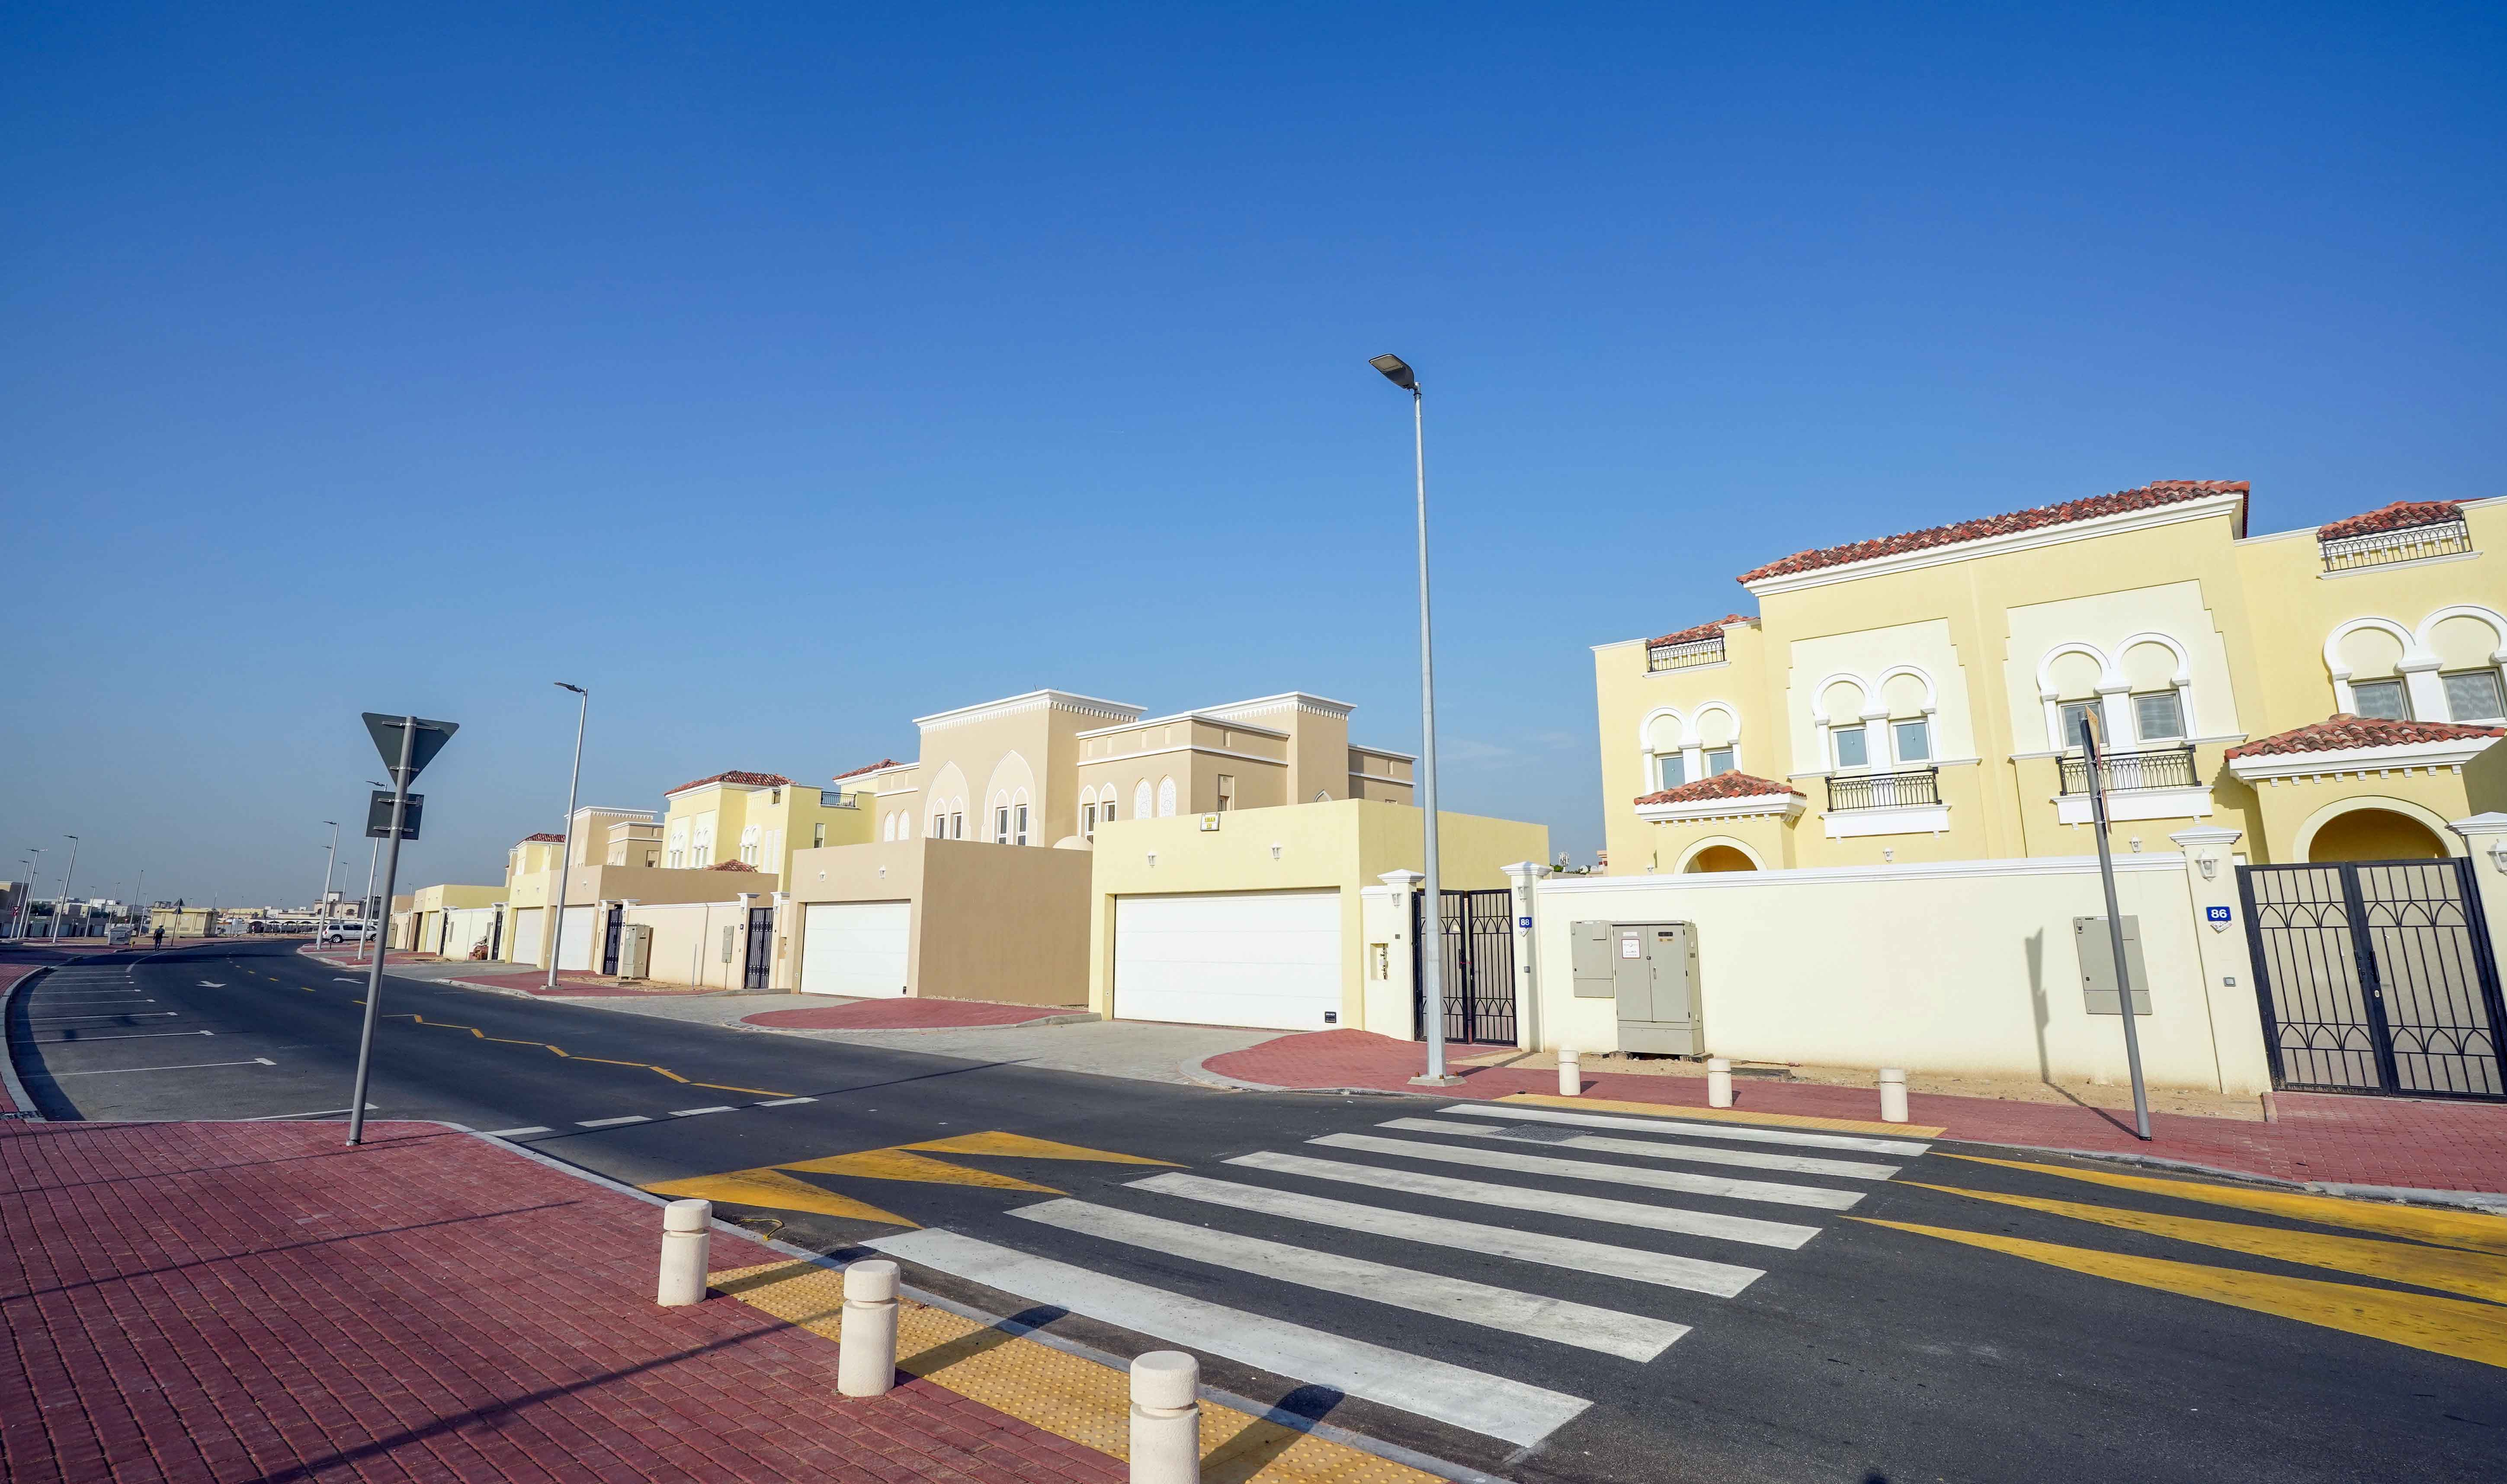 The Mohammed bin Rashid Housing Establishment development's internal road construction project has been pronounced a success by RTA.